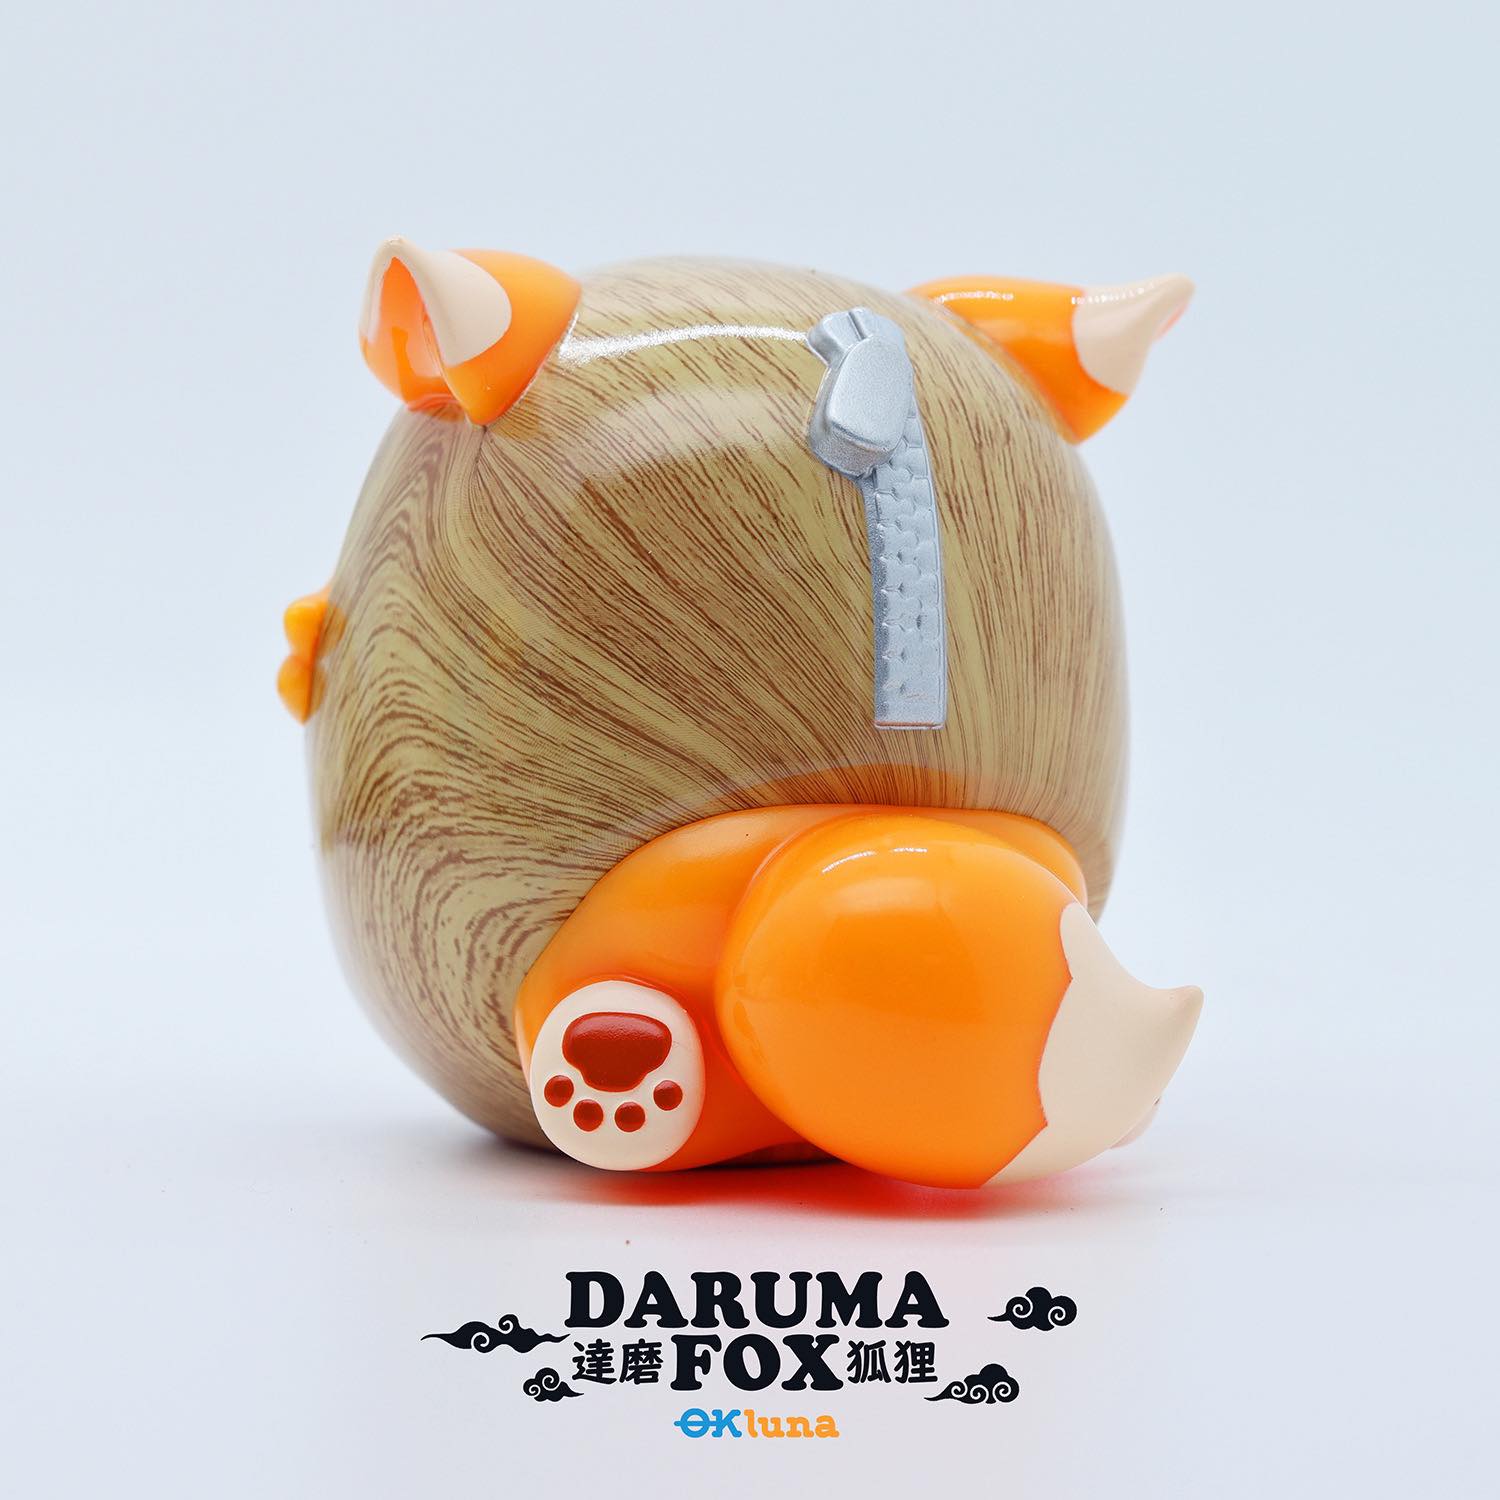 Daruma Fox - JOBI by Ok Luna